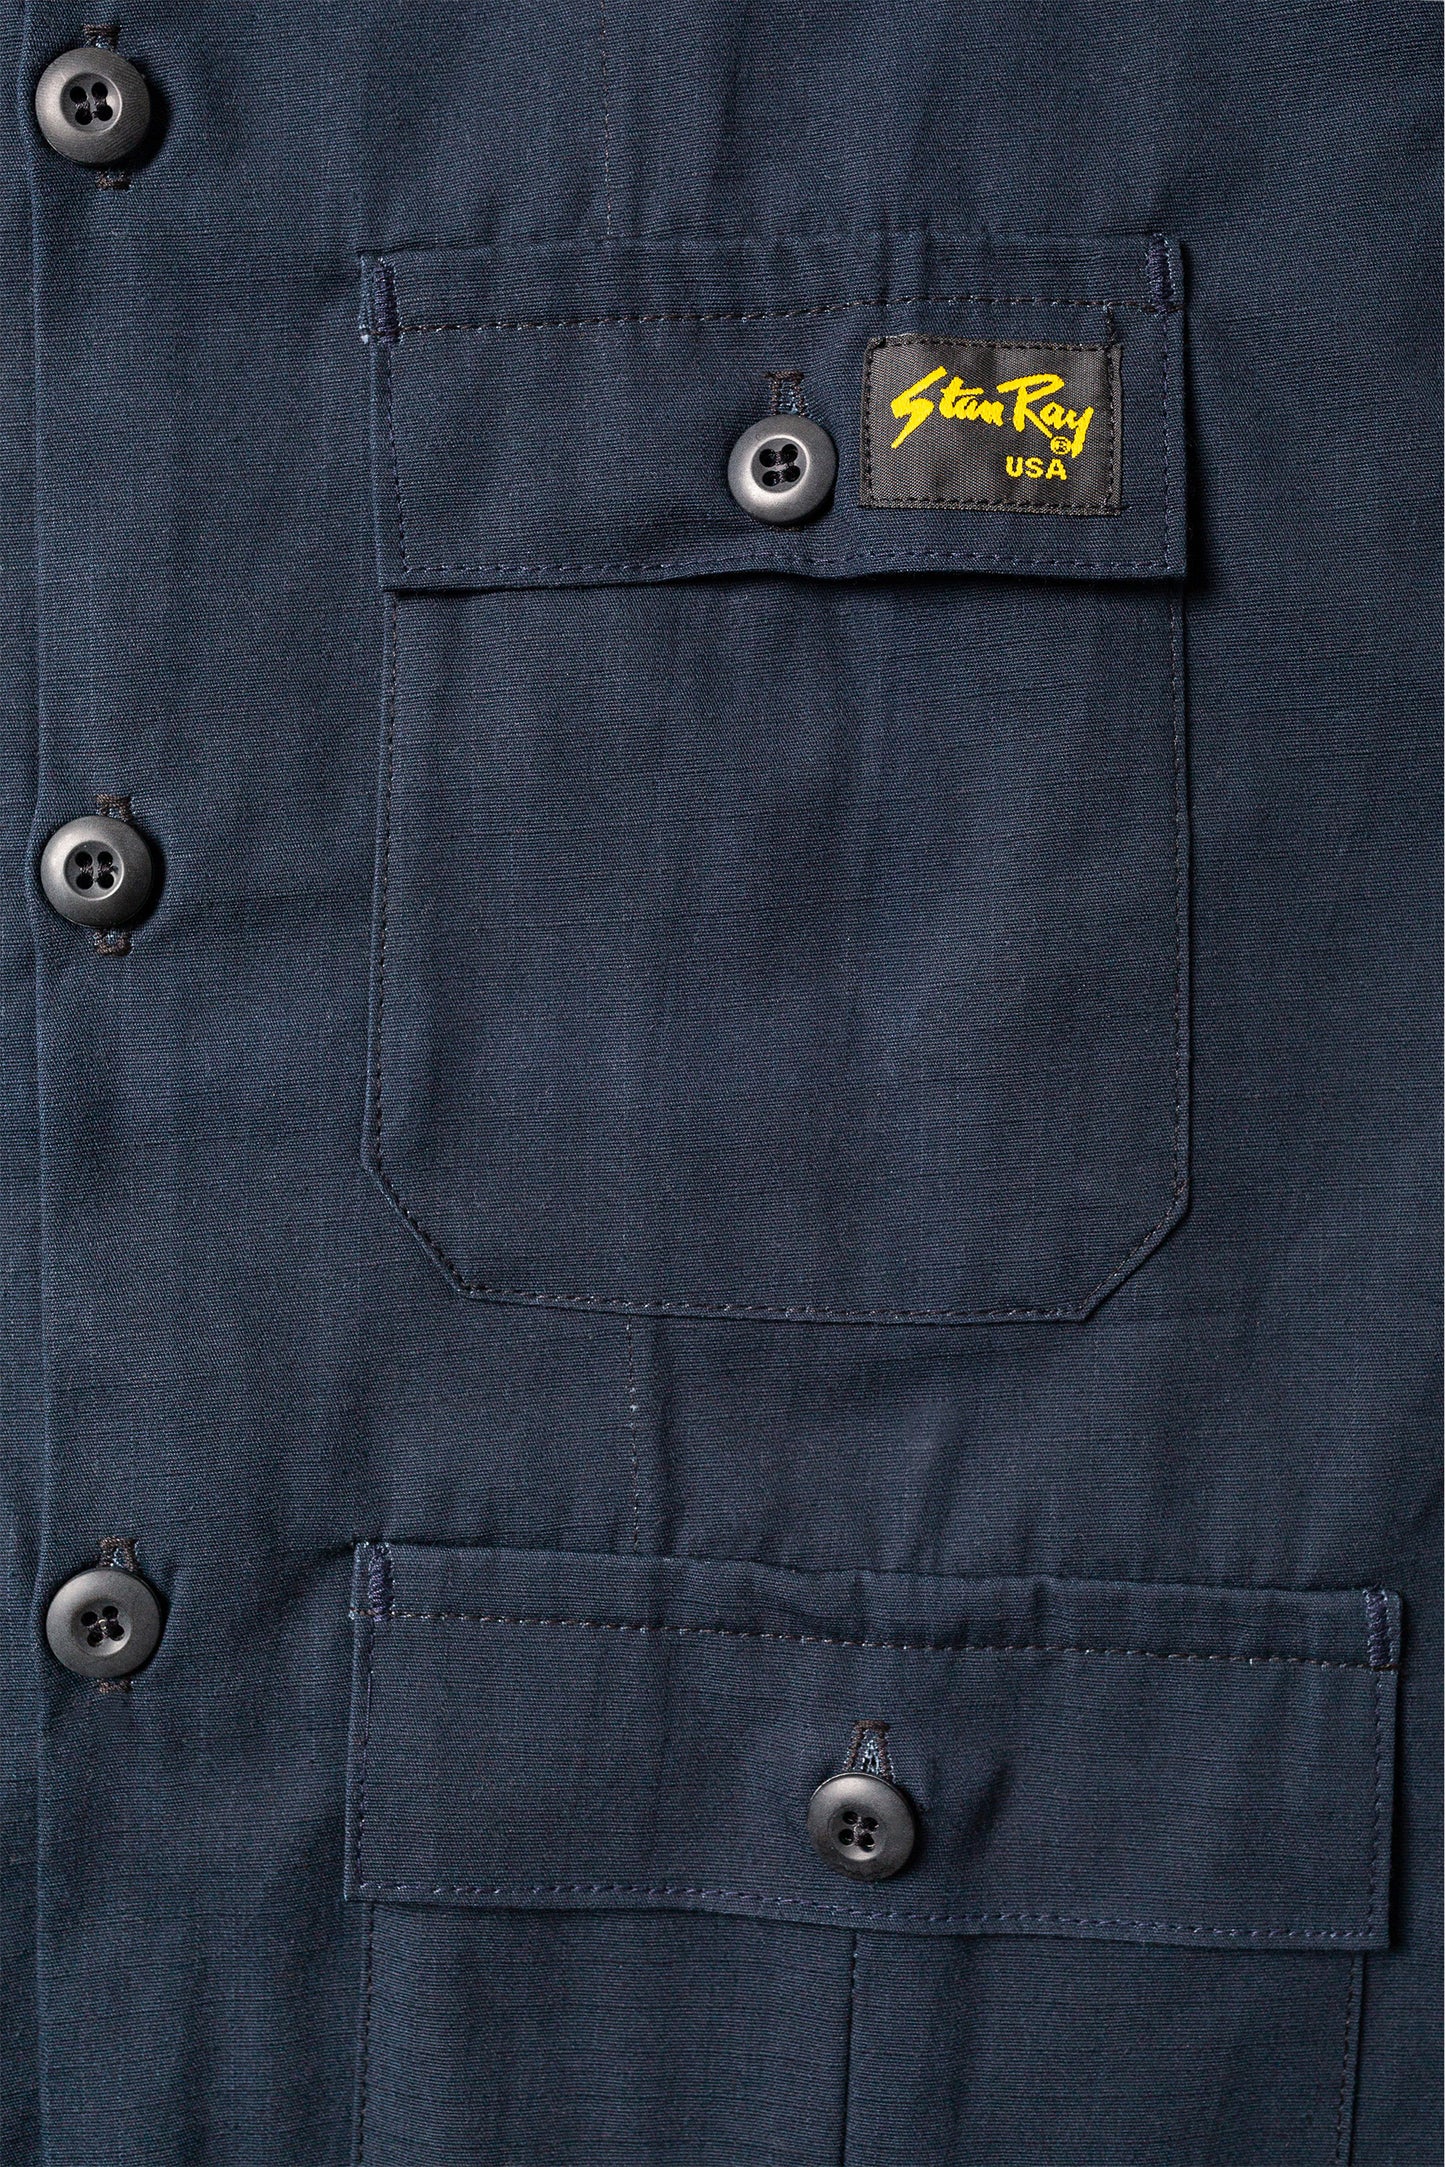 4 Pocket Jacket (Navy Ripstop) - Stan Ray